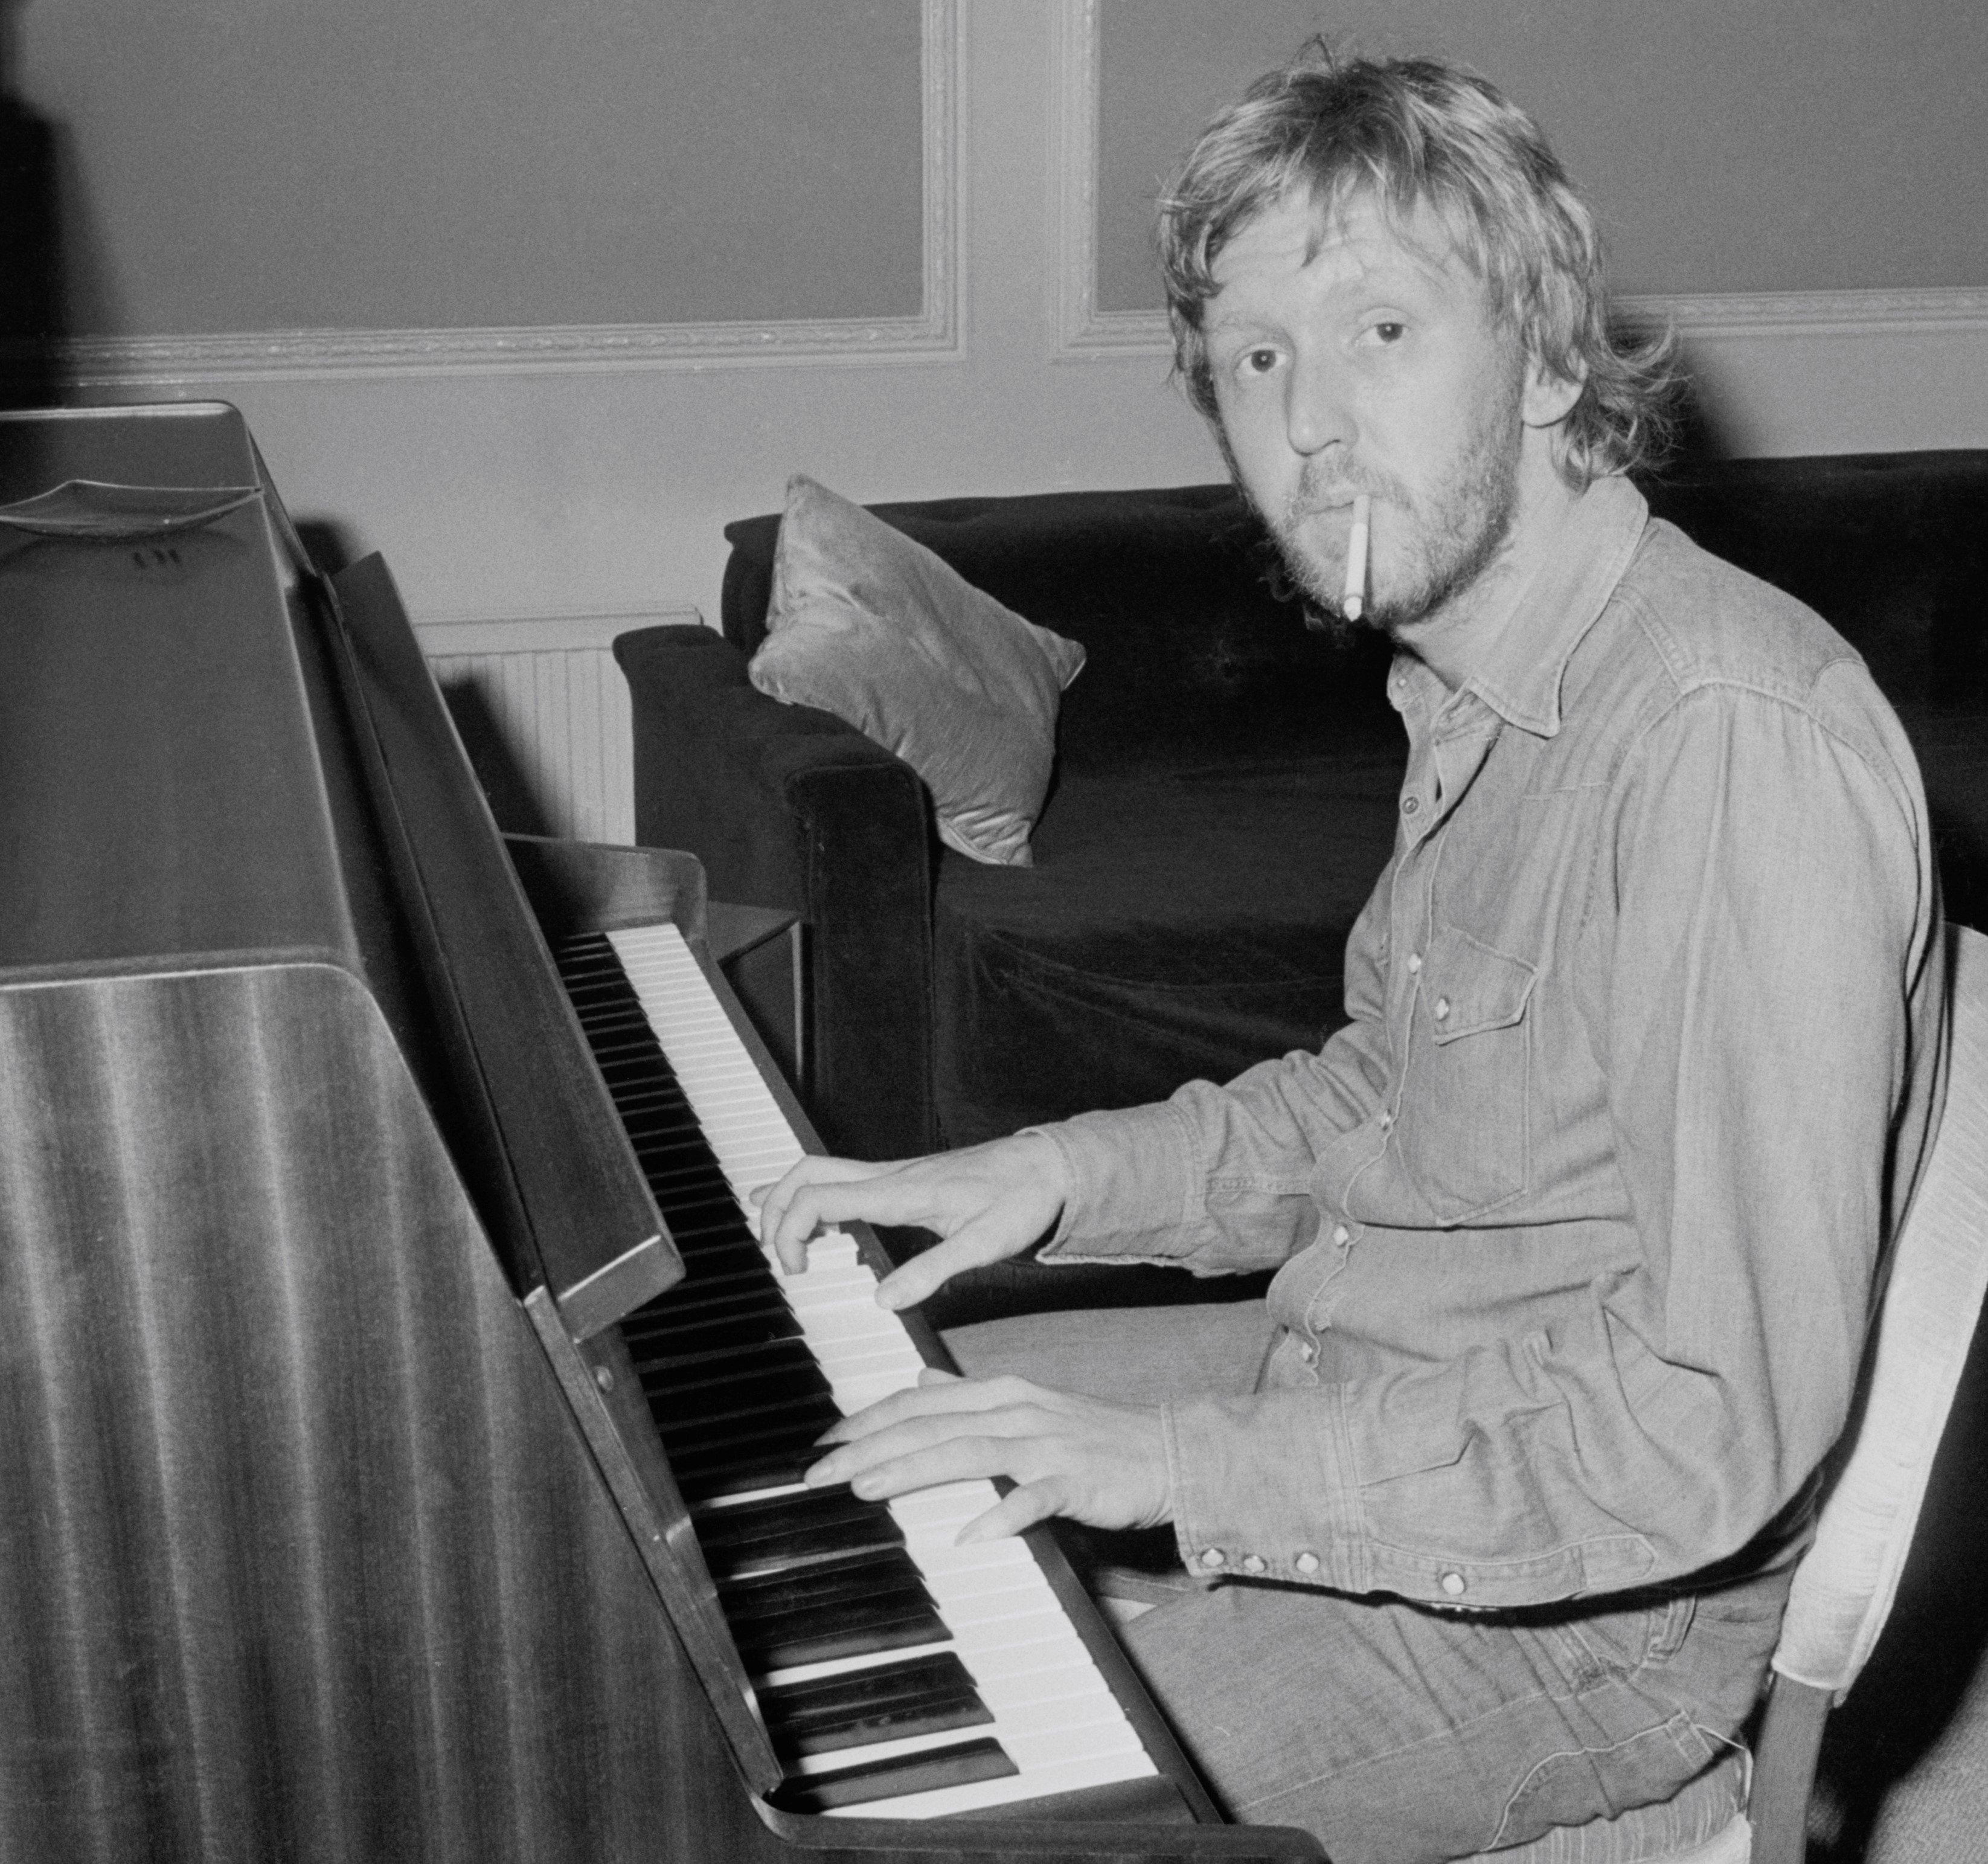 Harry Nilsson at a piano